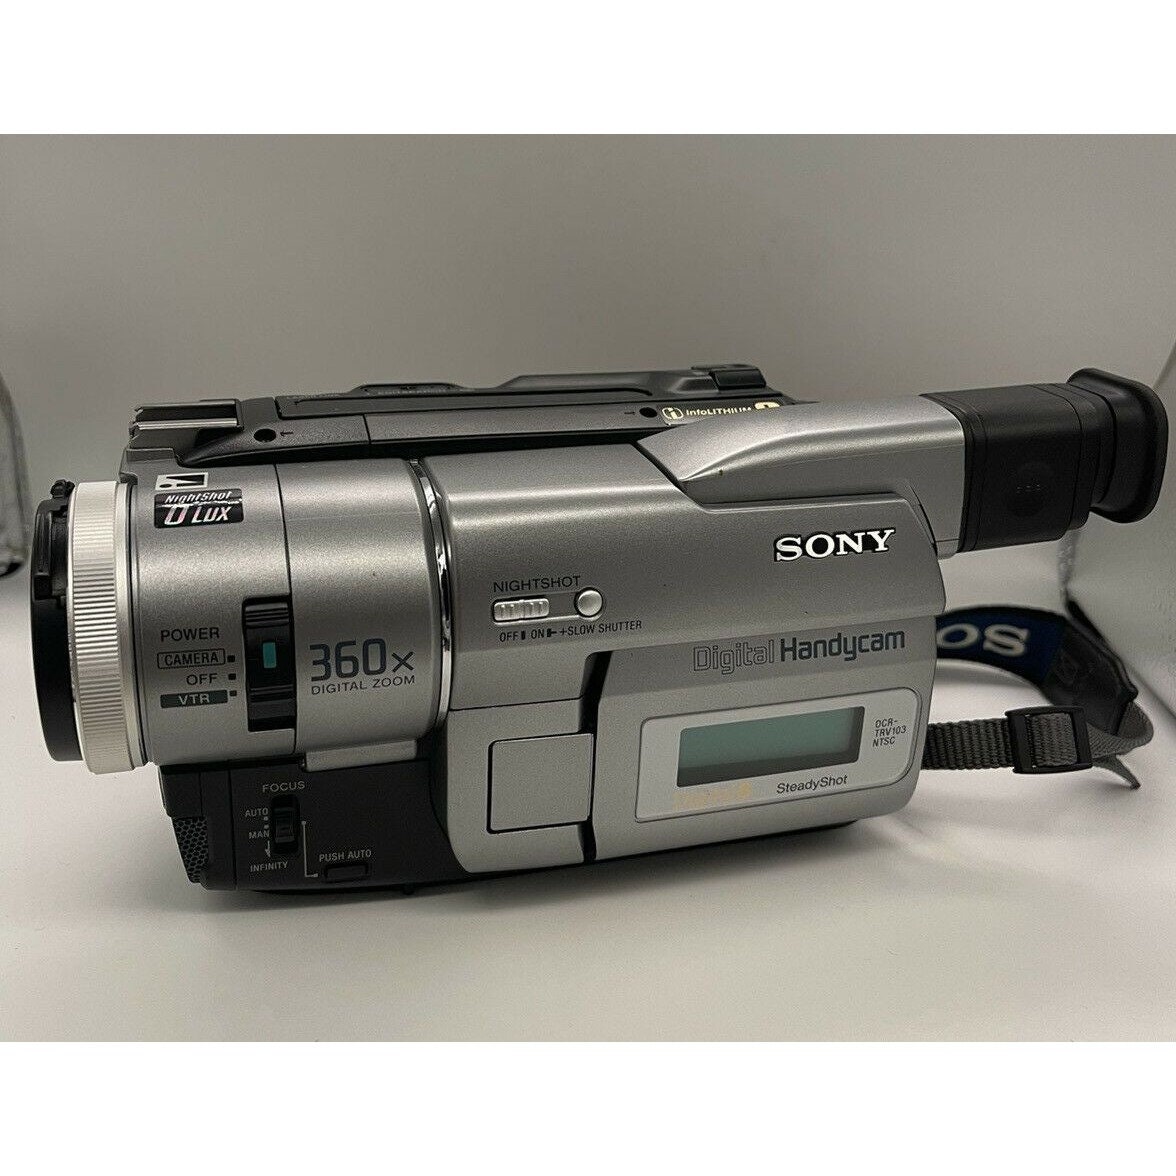 Sony Handycam DCR-TRV103 Digital-8 Camcorder Etsy